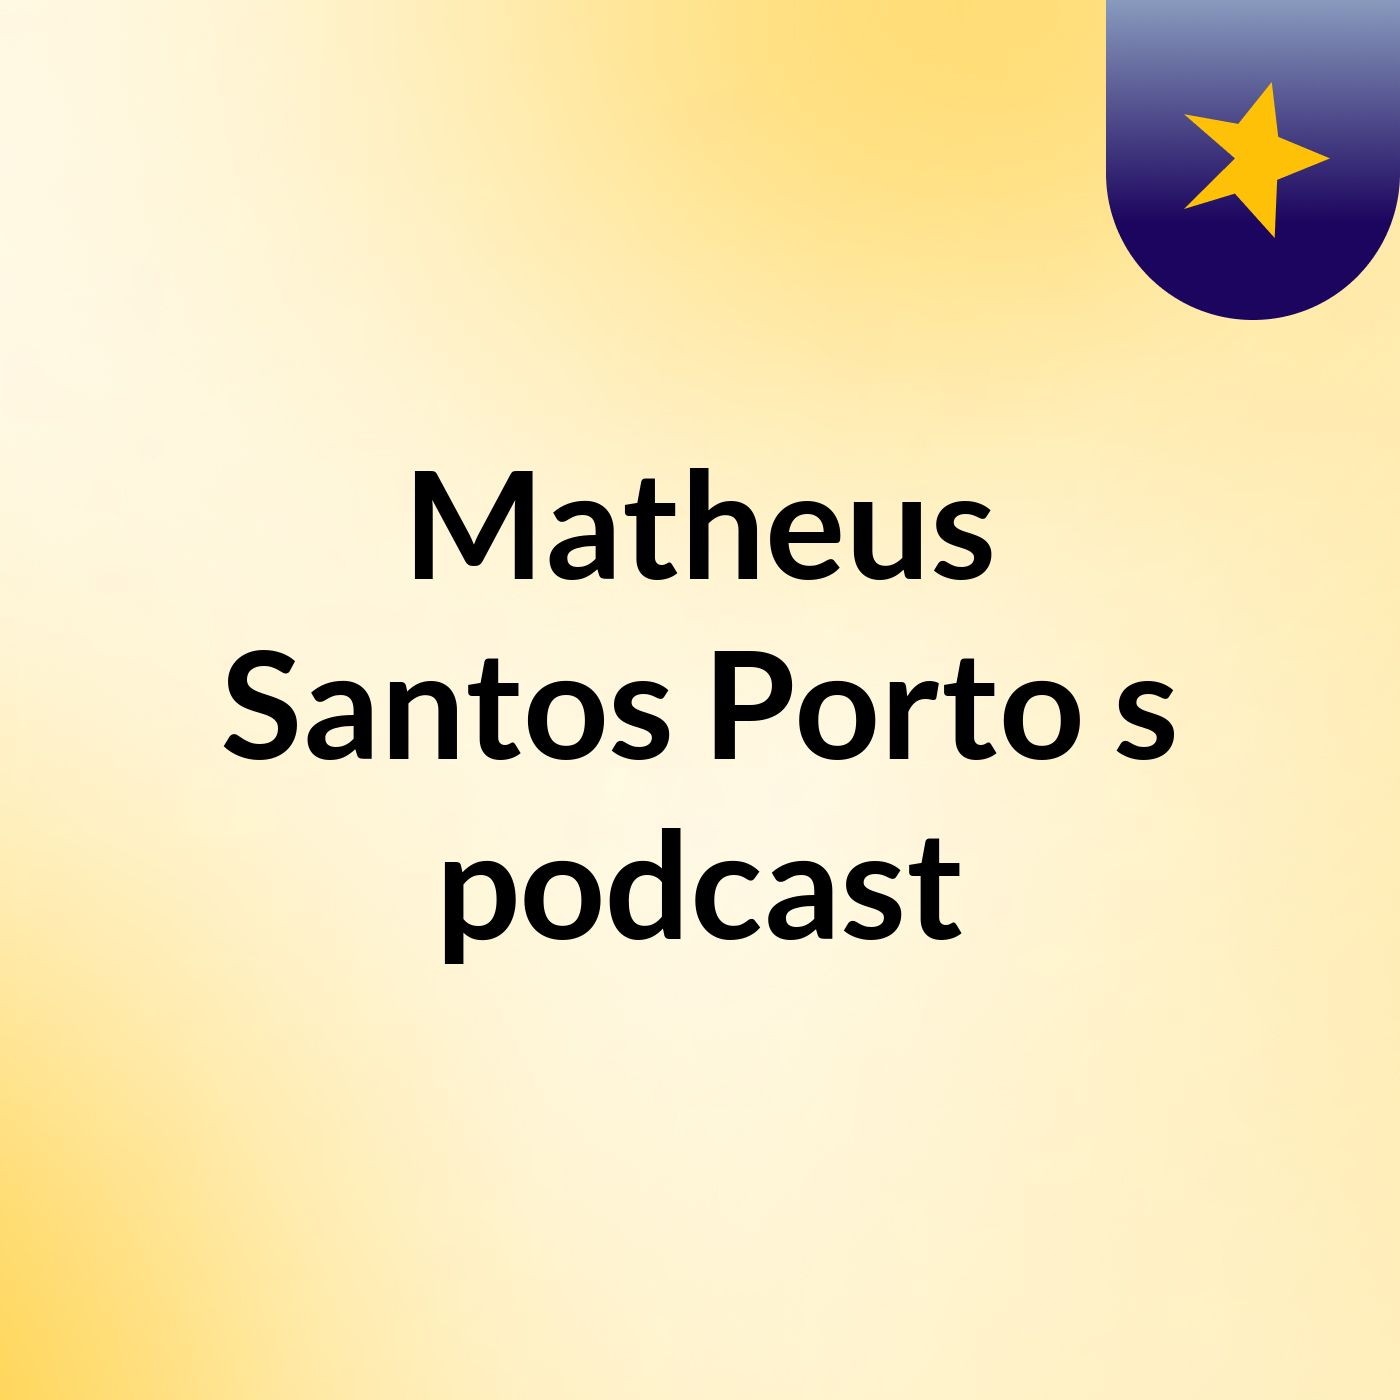 Matheus Santos Porto's podcast